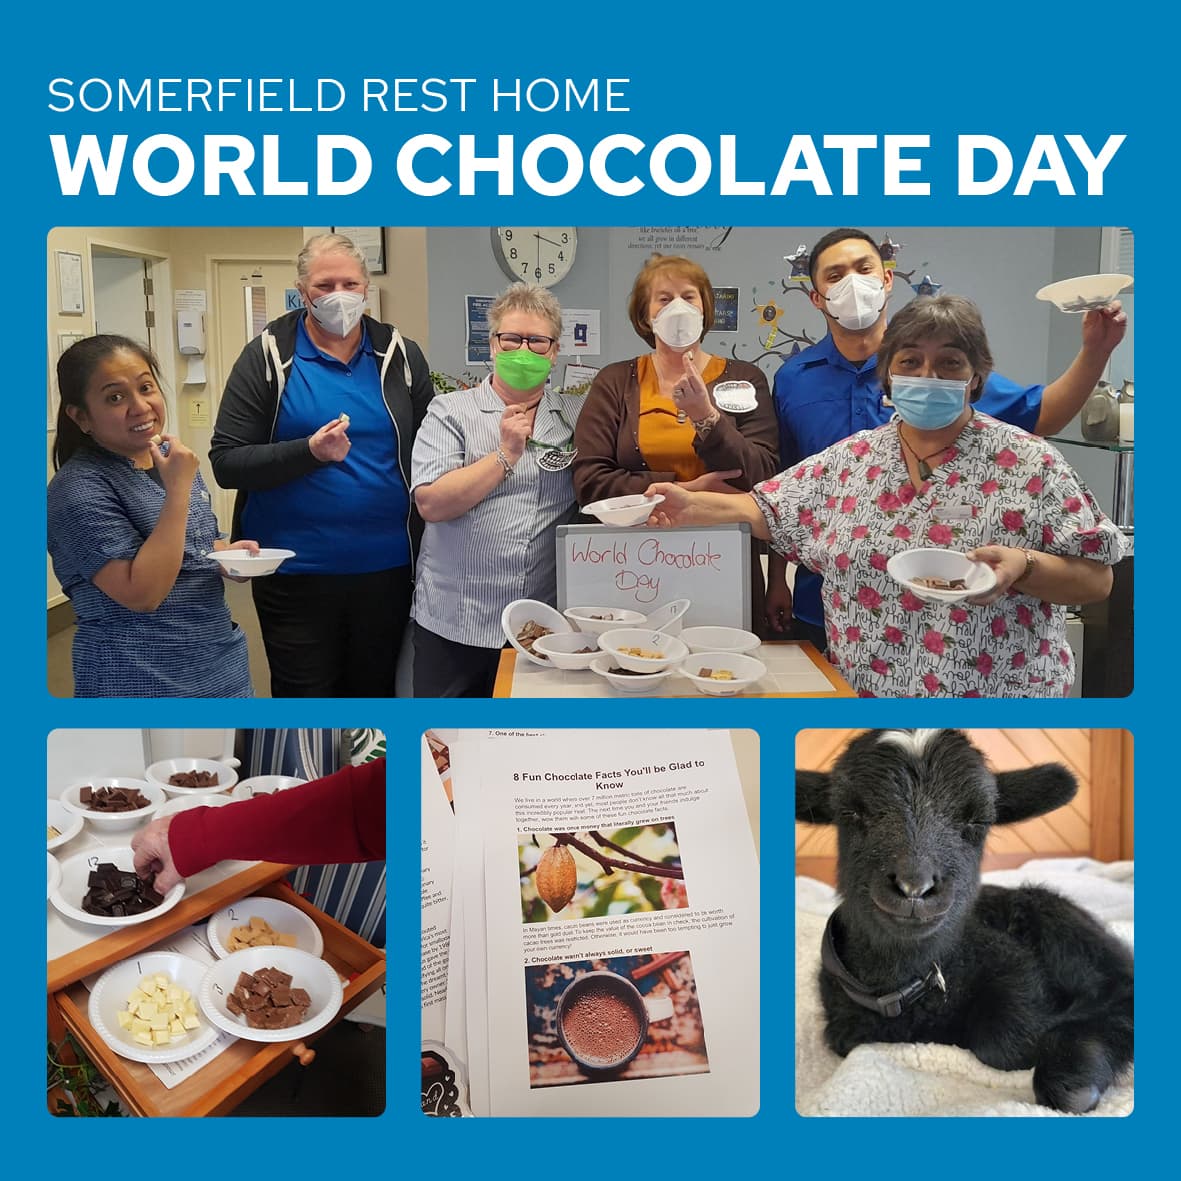 World Chocolate Day at Somerfield